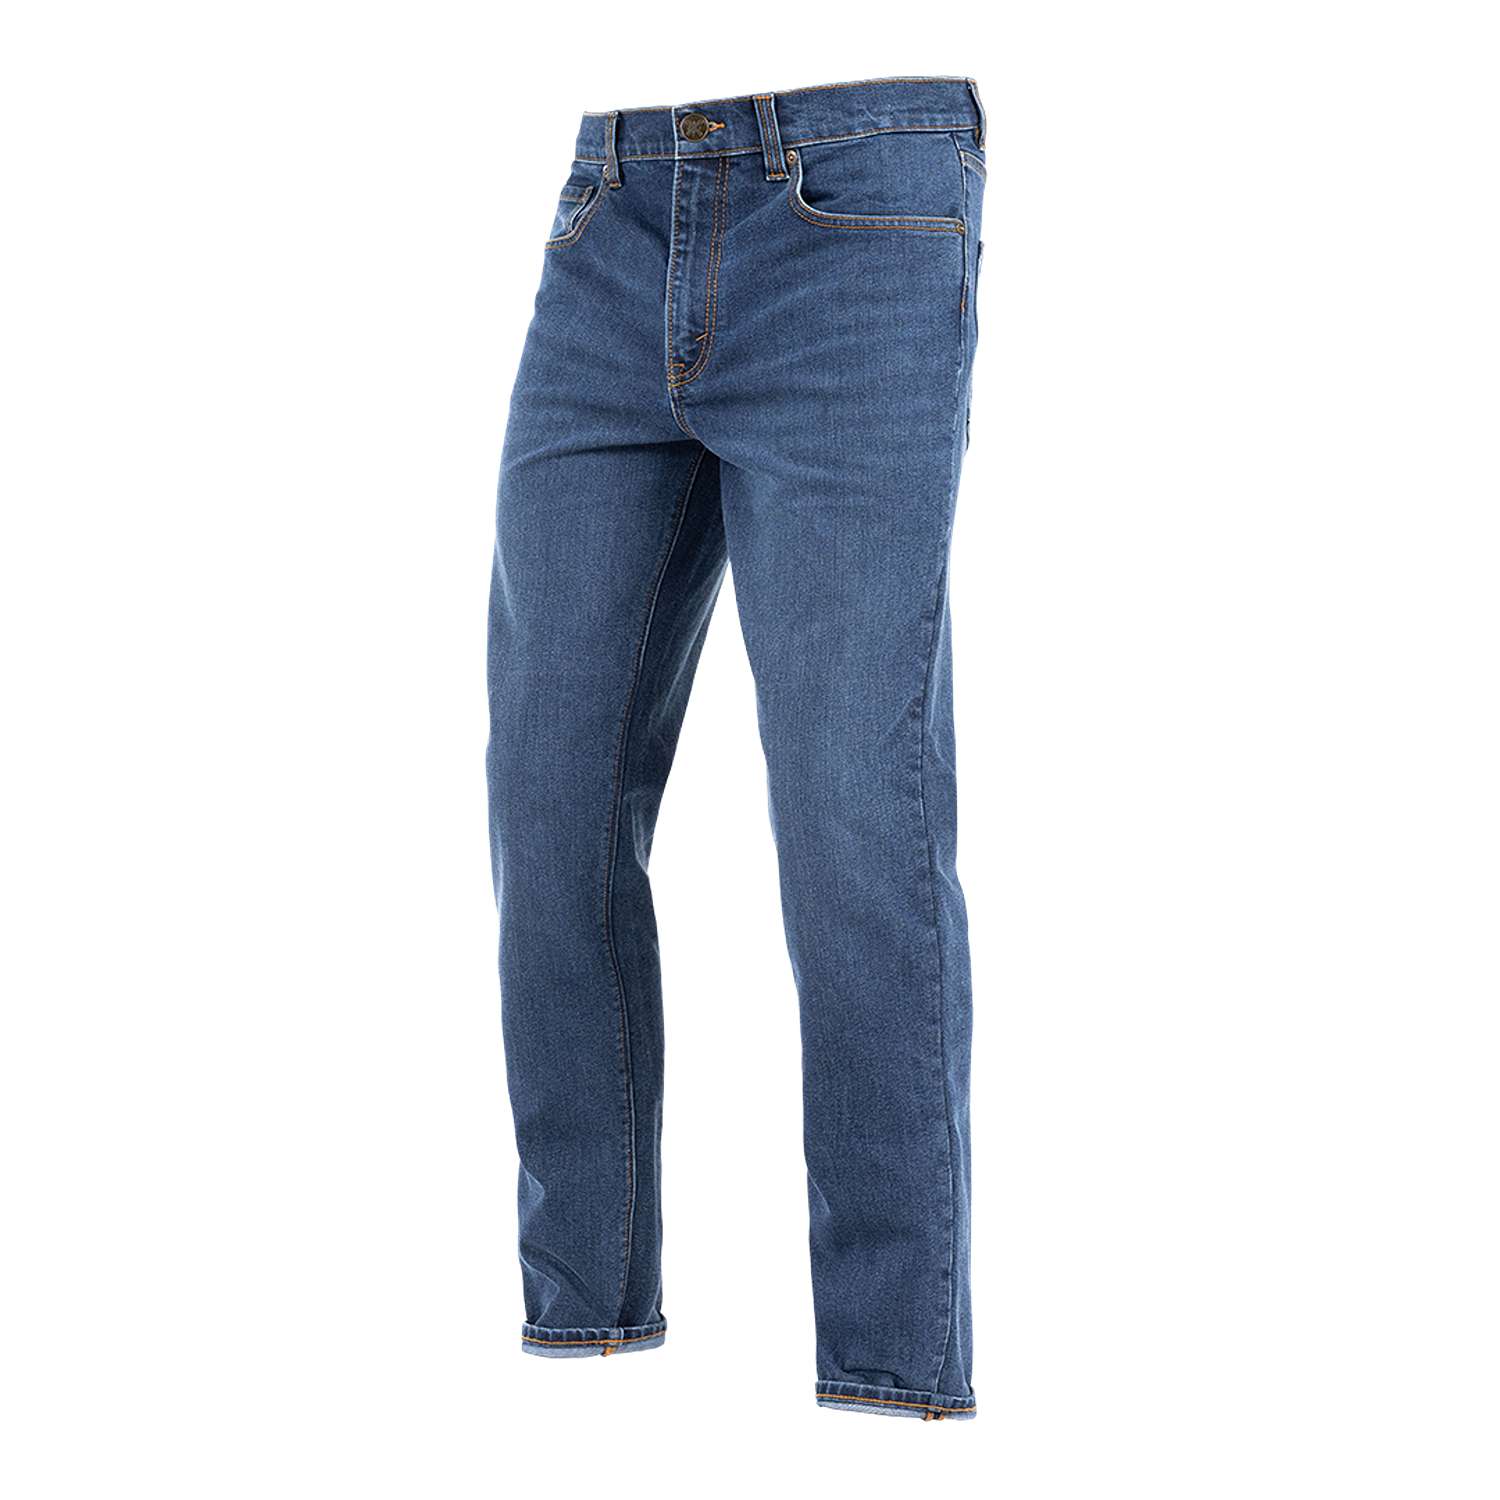 Image of EU John Doe Classic Tapered Jeans Indigo Taille W38/L32